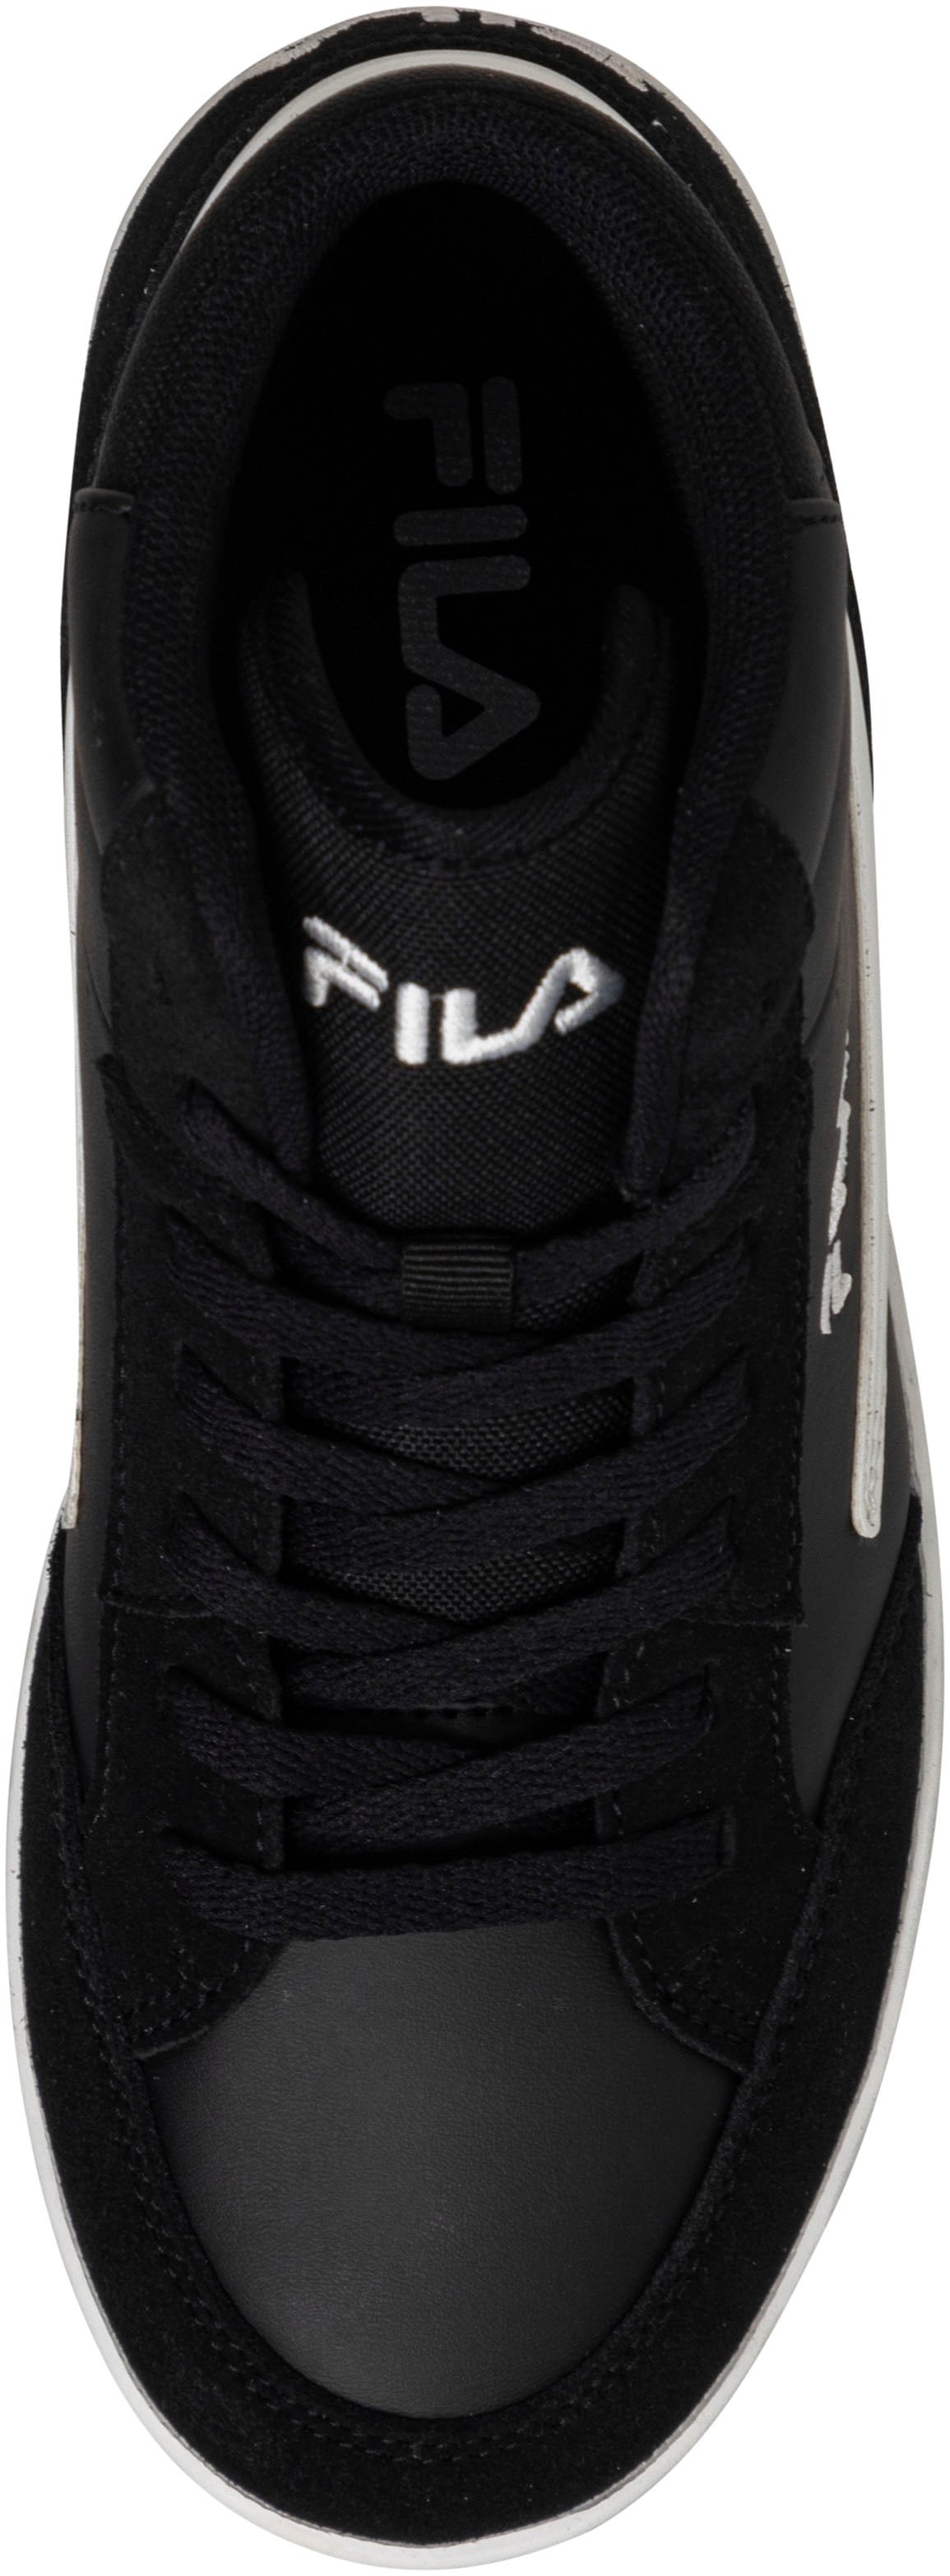 Fila Sneaker »FILA CREW MID kaufen online | BAUR teens«